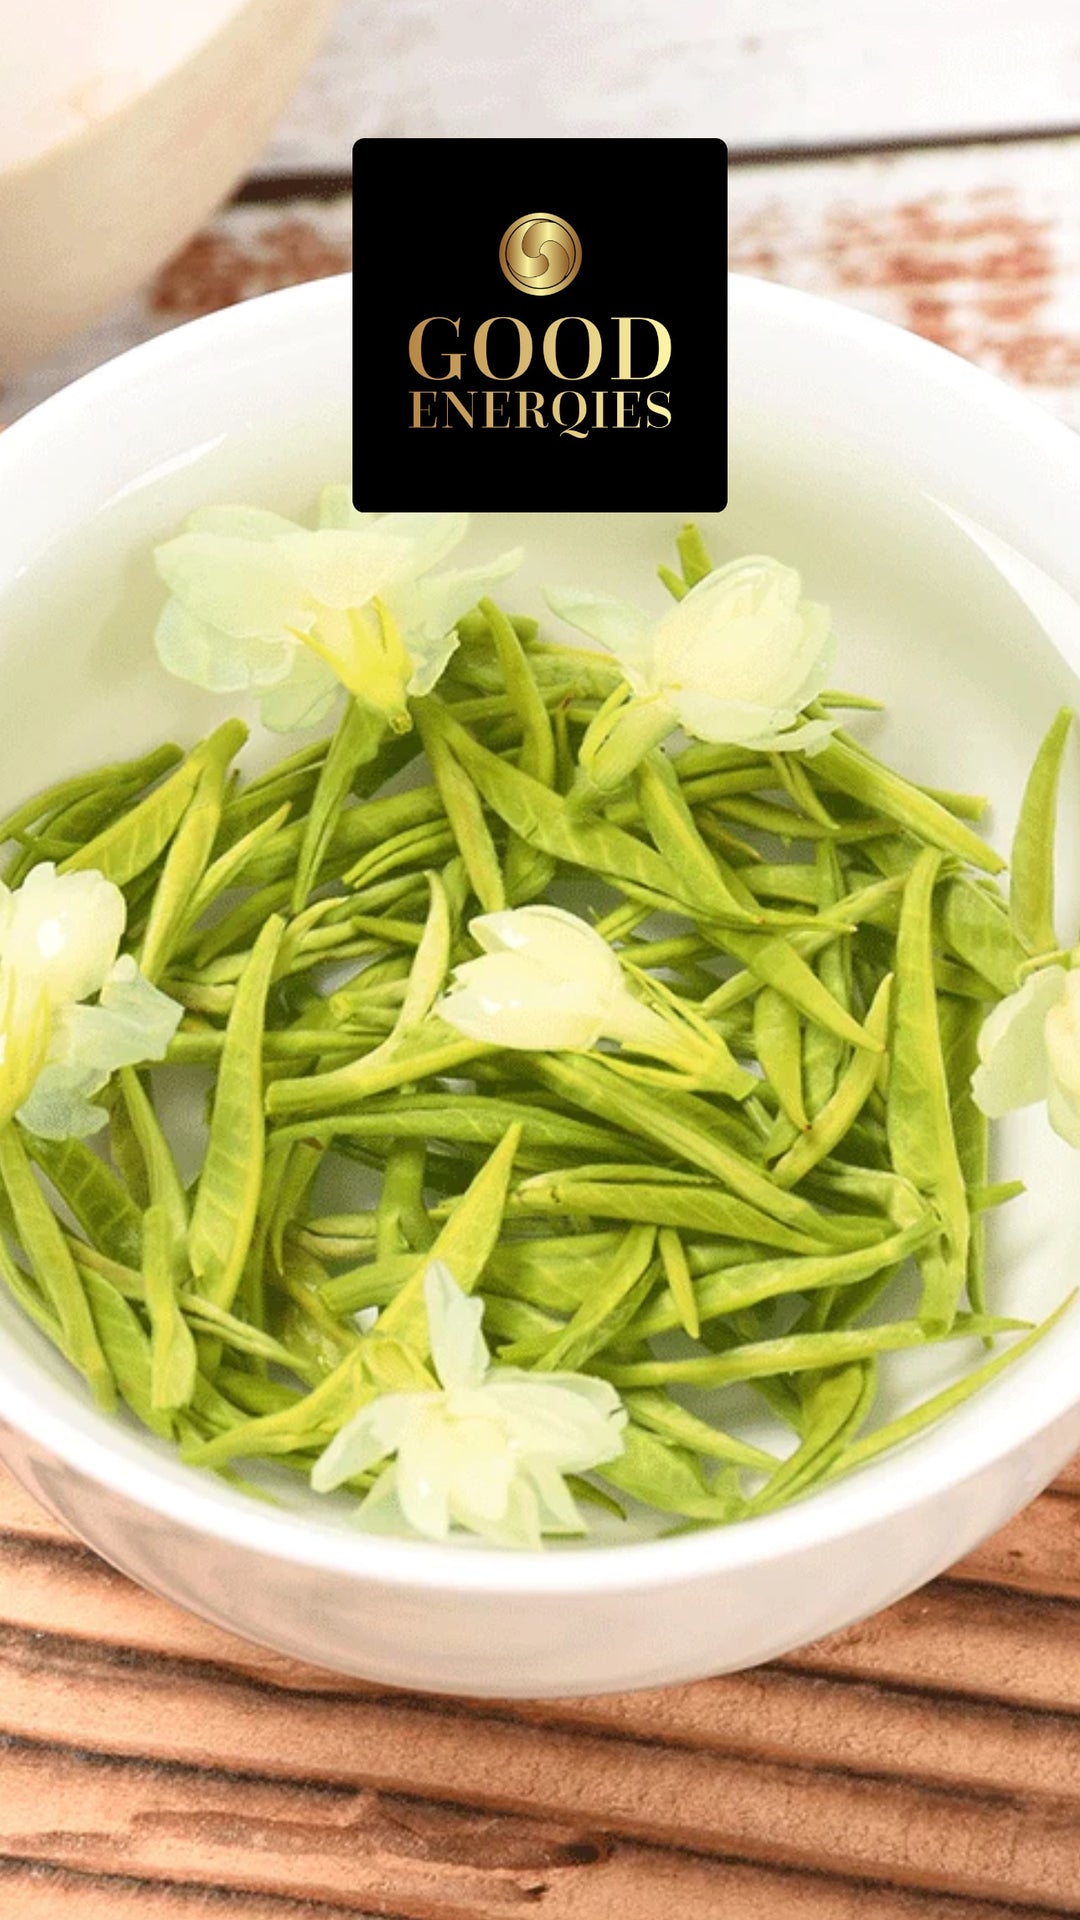 5. ☴ Tao in Paris • Jasmine Dragon Pearls Tea • EU Organic Tea